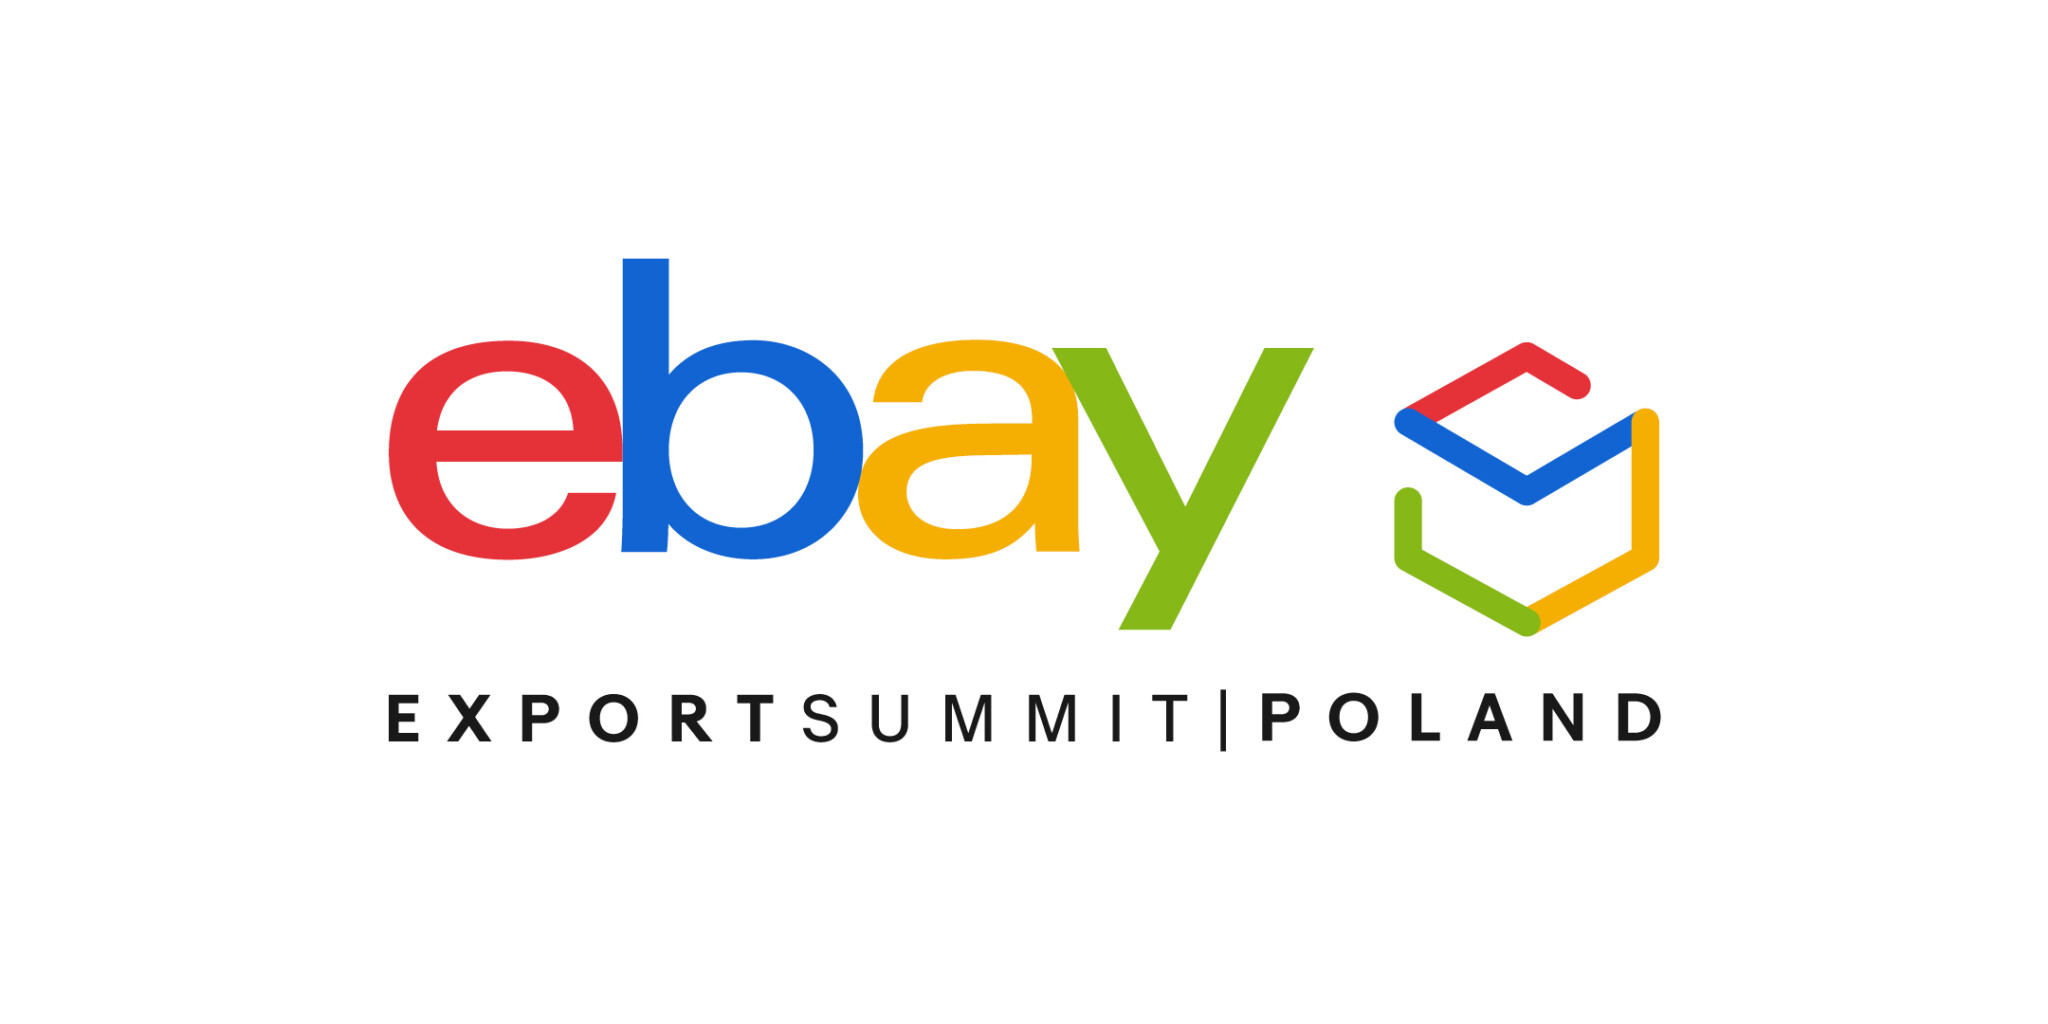 eBay export summit